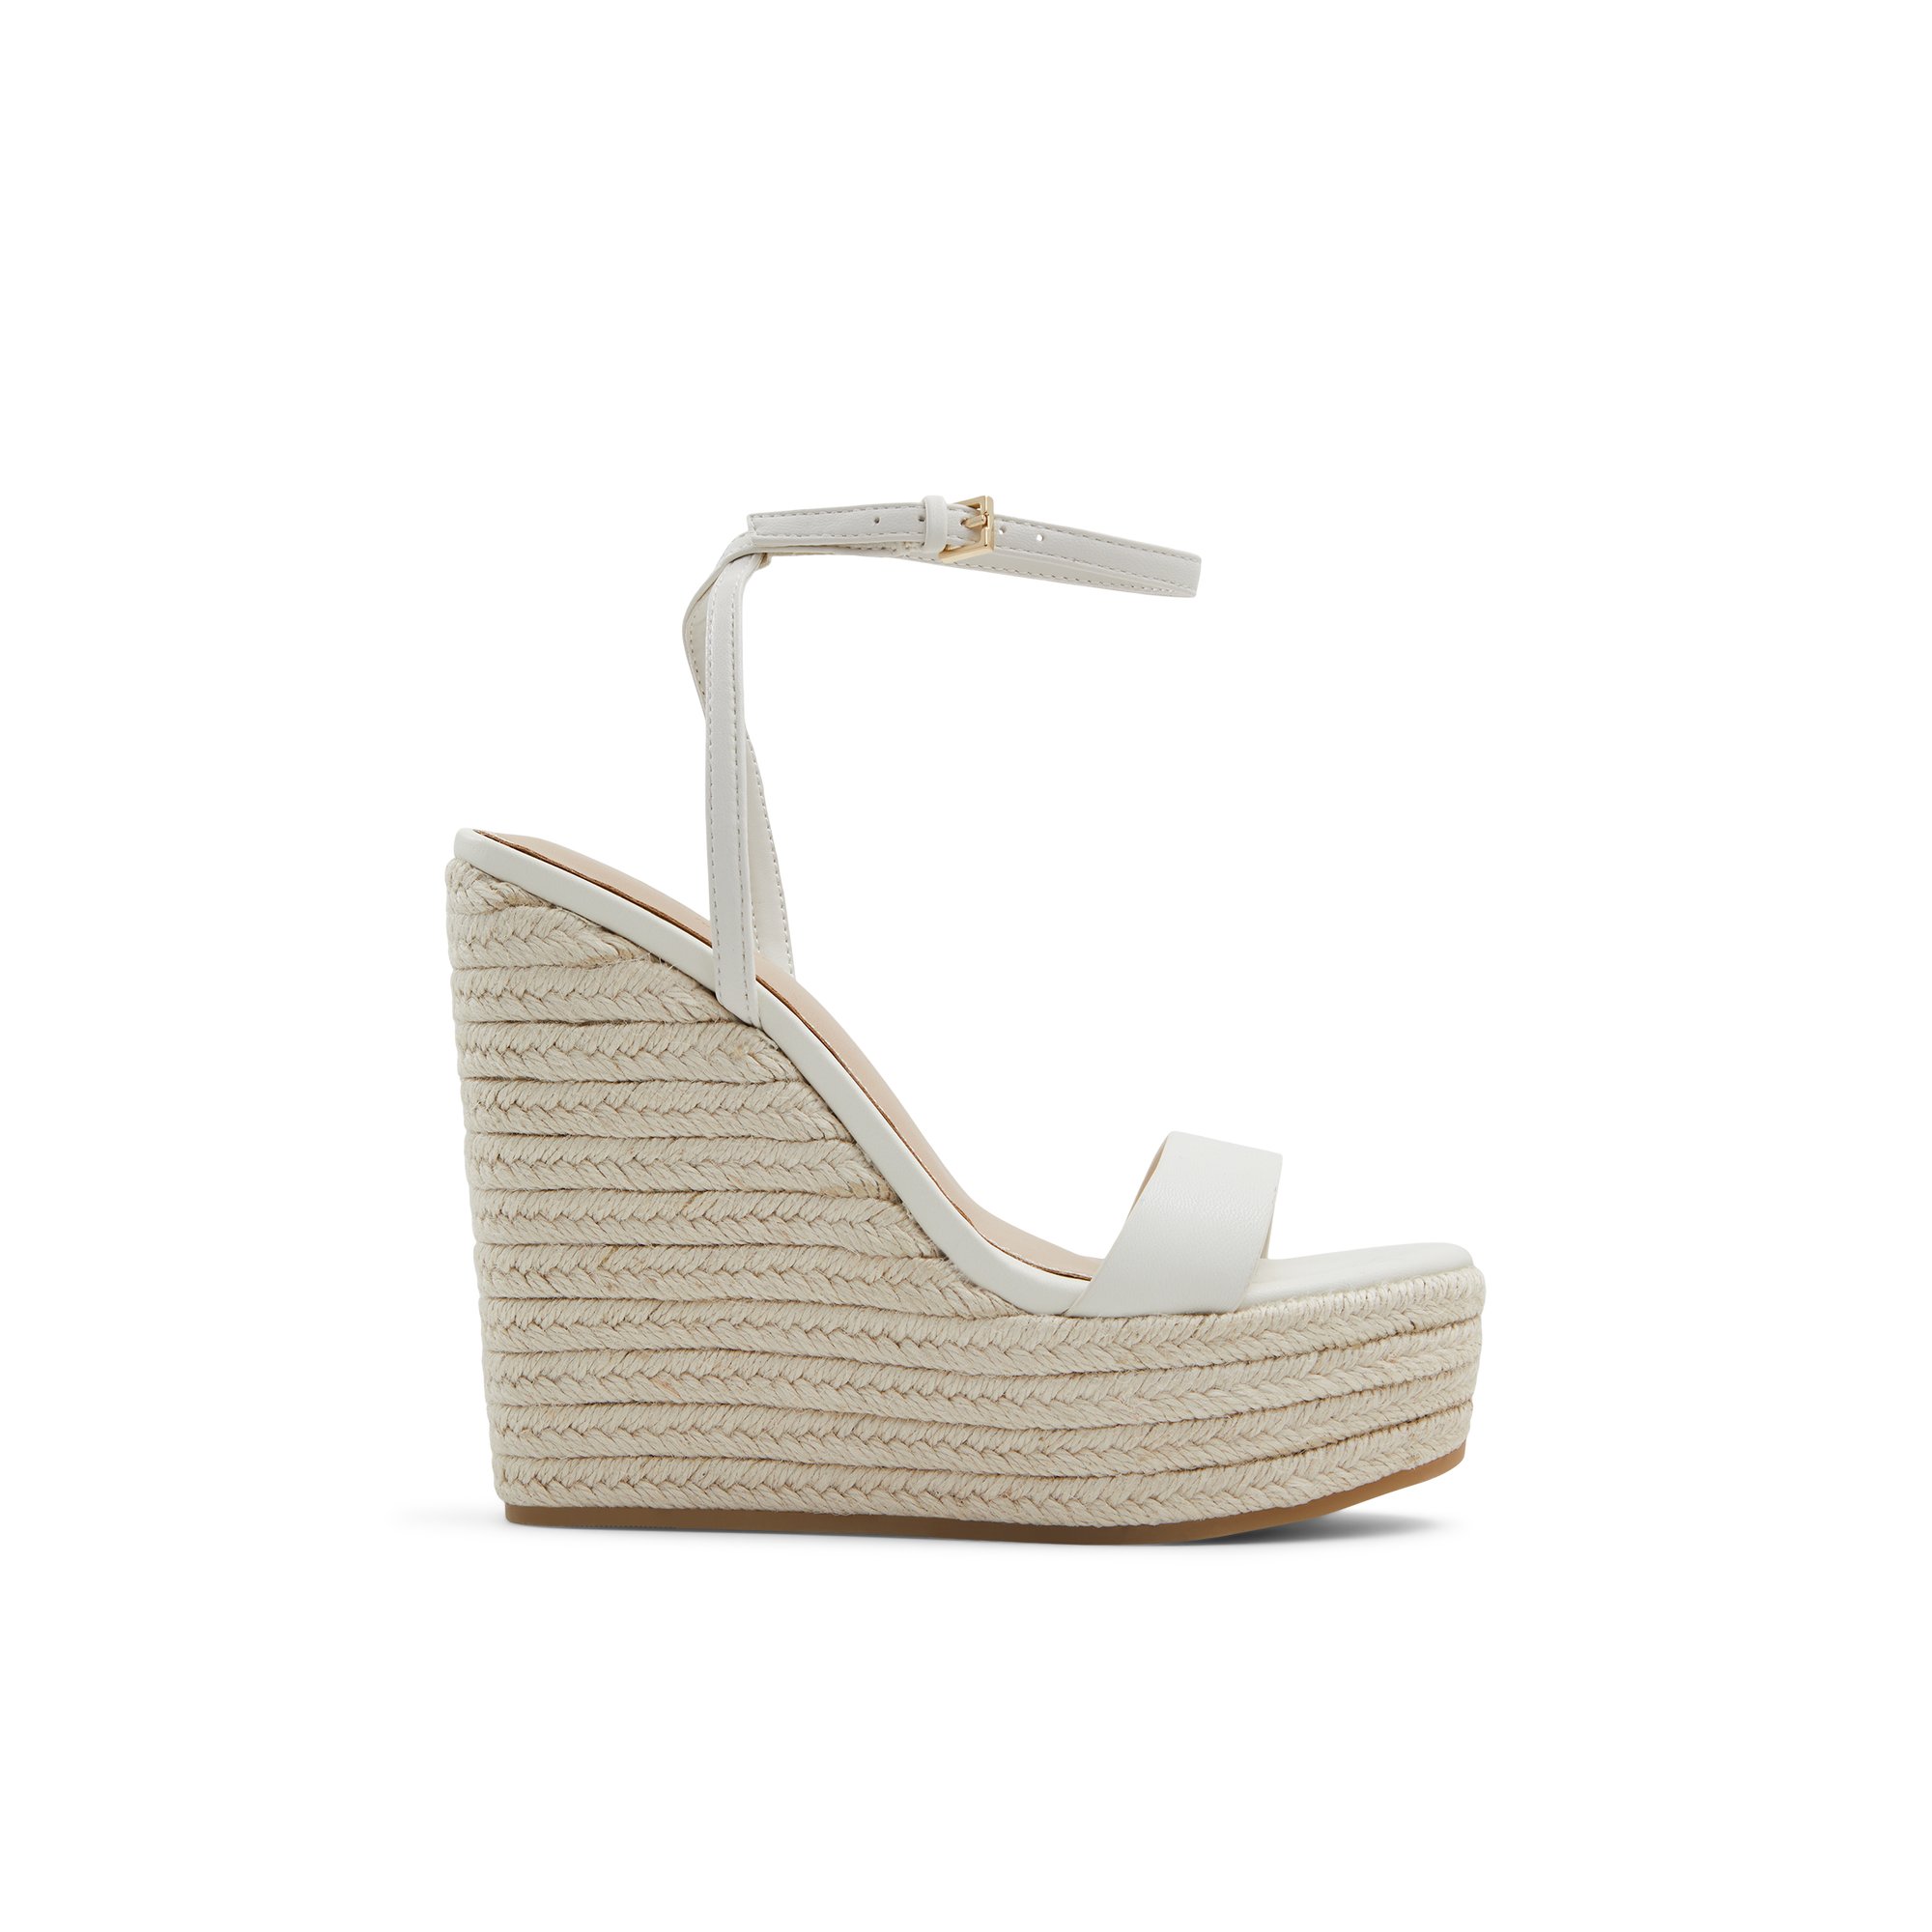 ALDO Marysol - Women's Sandals Wedges - White